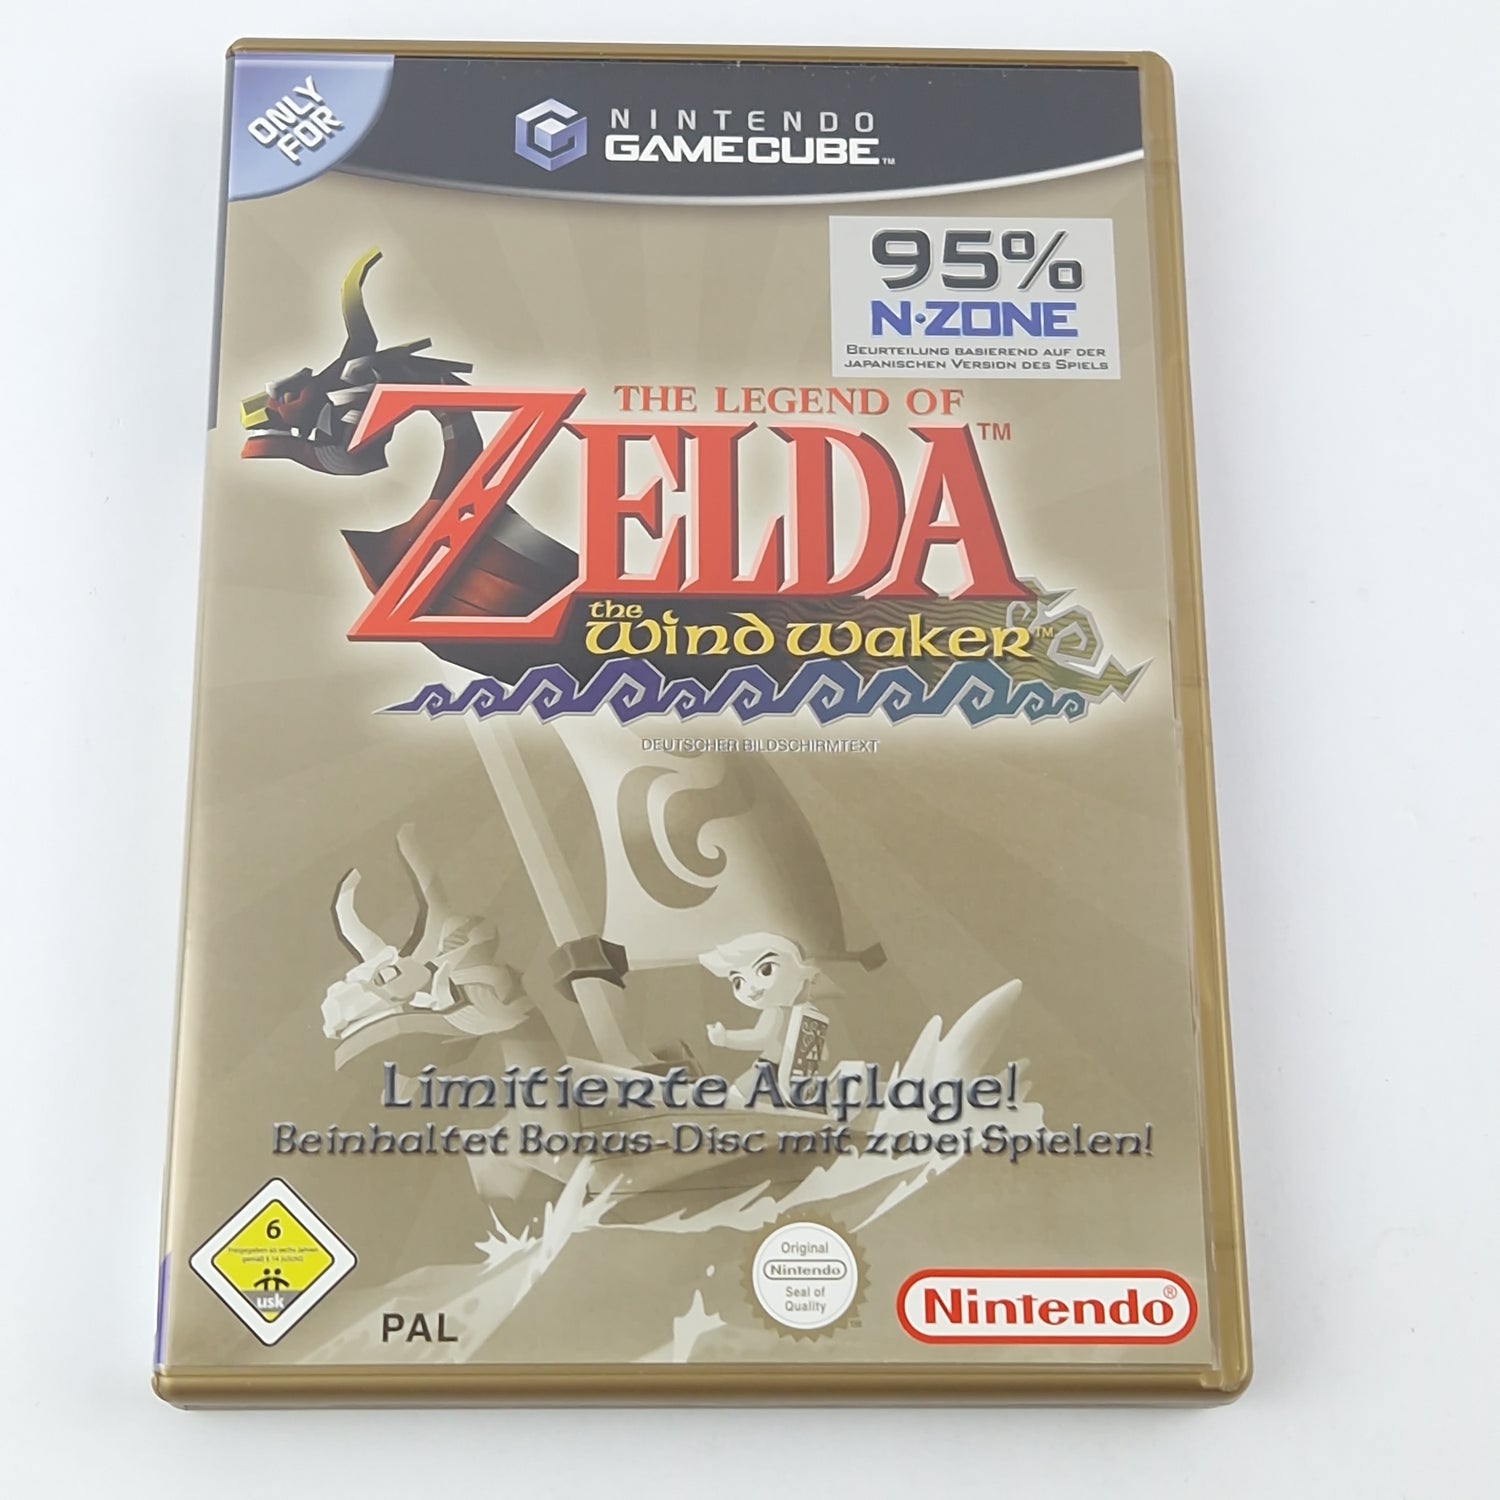 Nintendo Gamecube : Zelda The Windwaker Limitierte Auflage + Ultimate Cheats